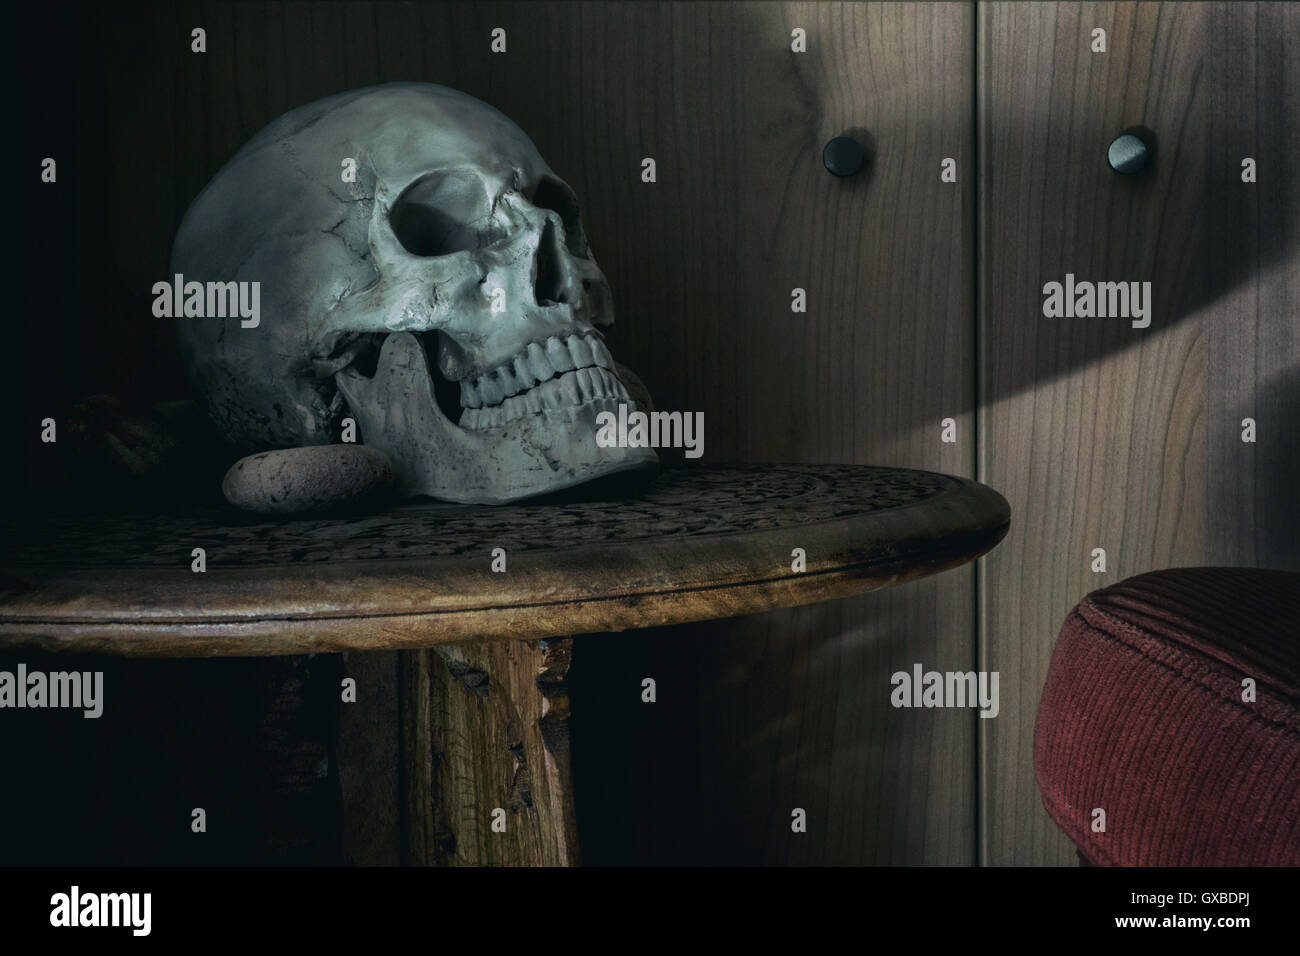 Still life photography with human skull Stock Photo